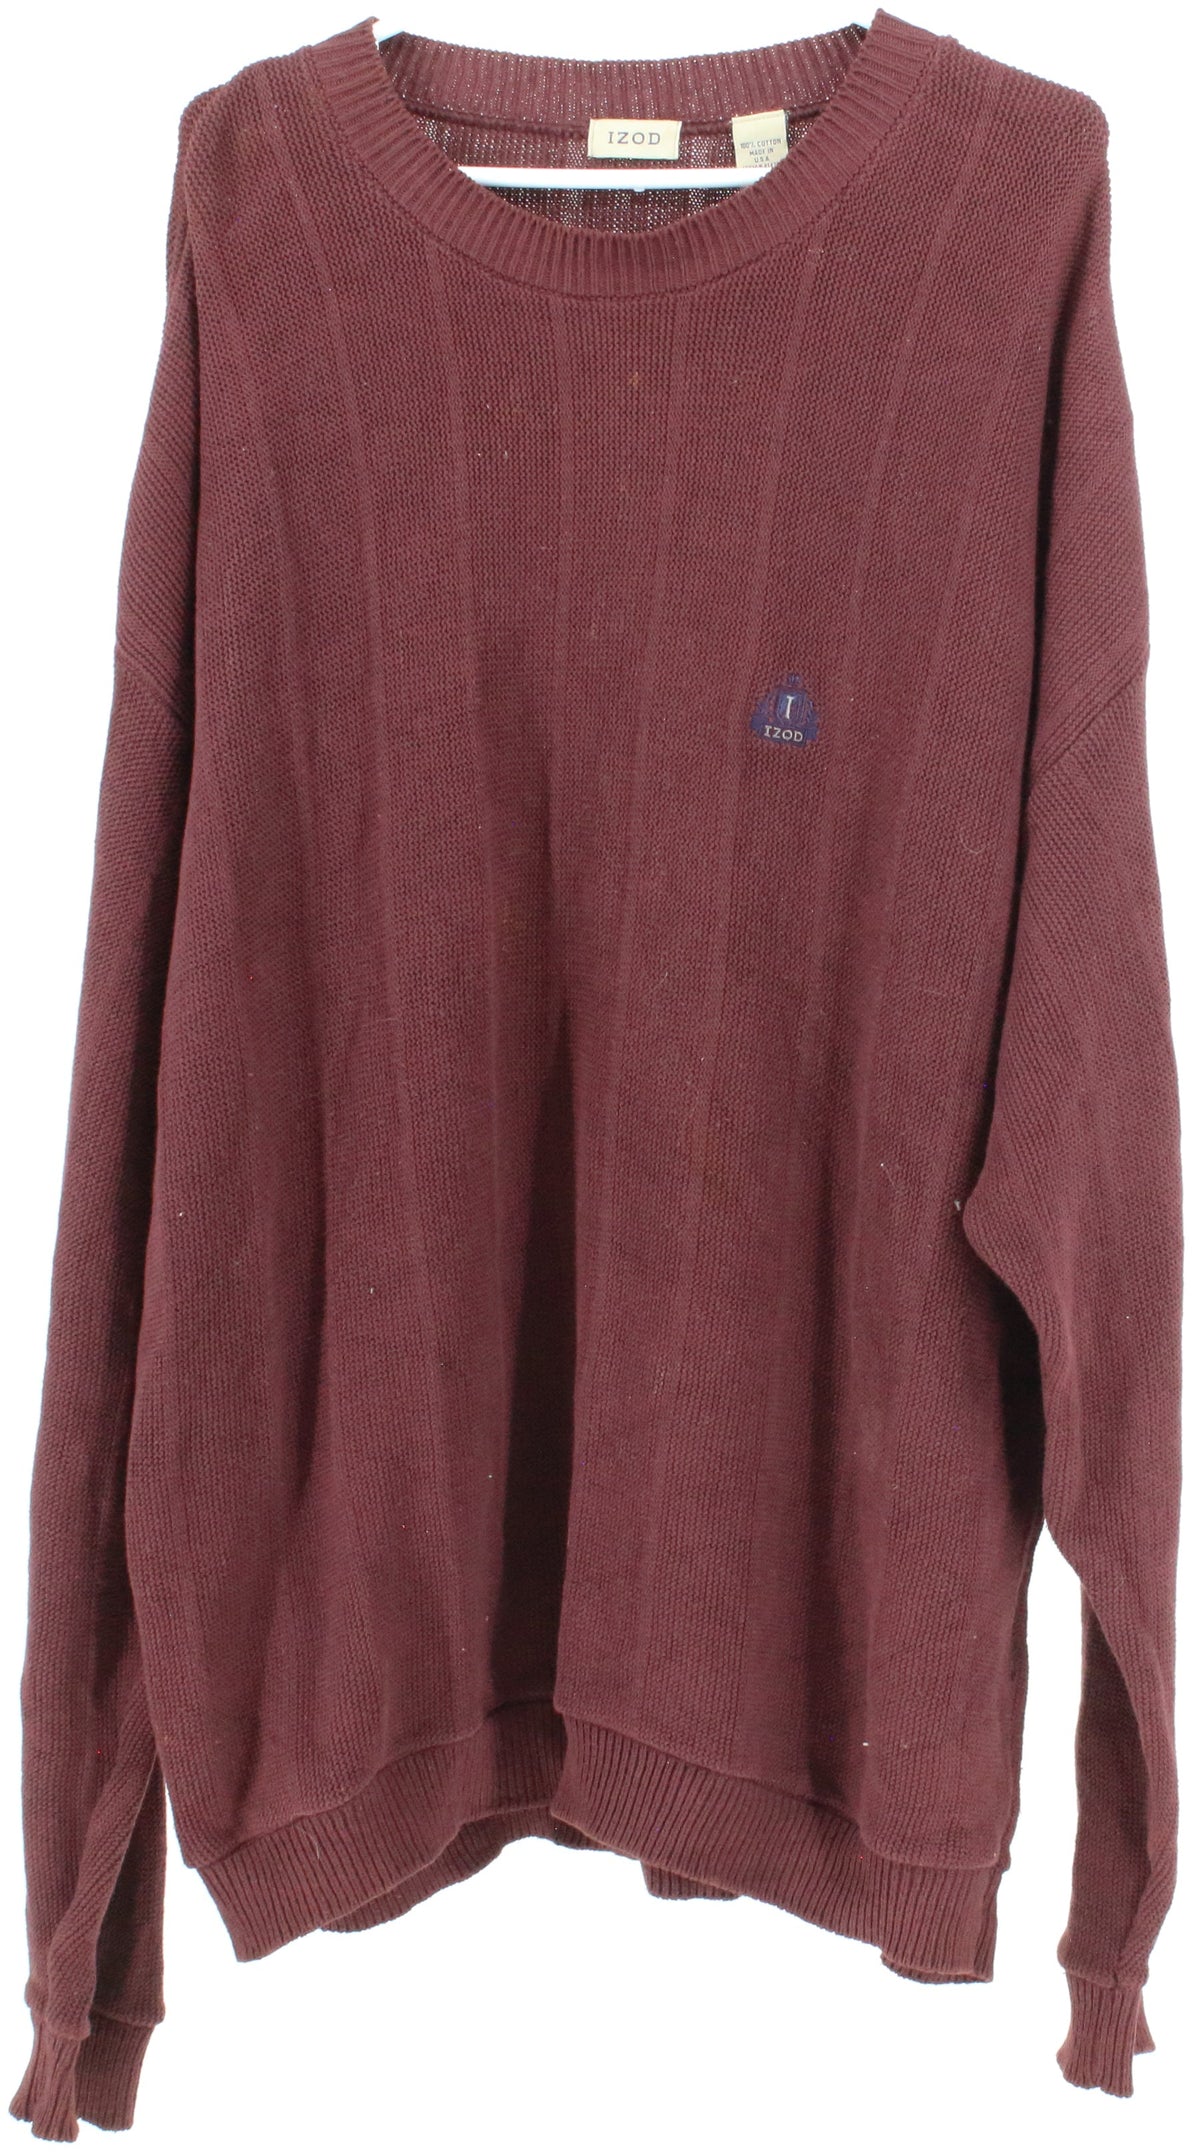 Izod Burgundy Men's Sweater